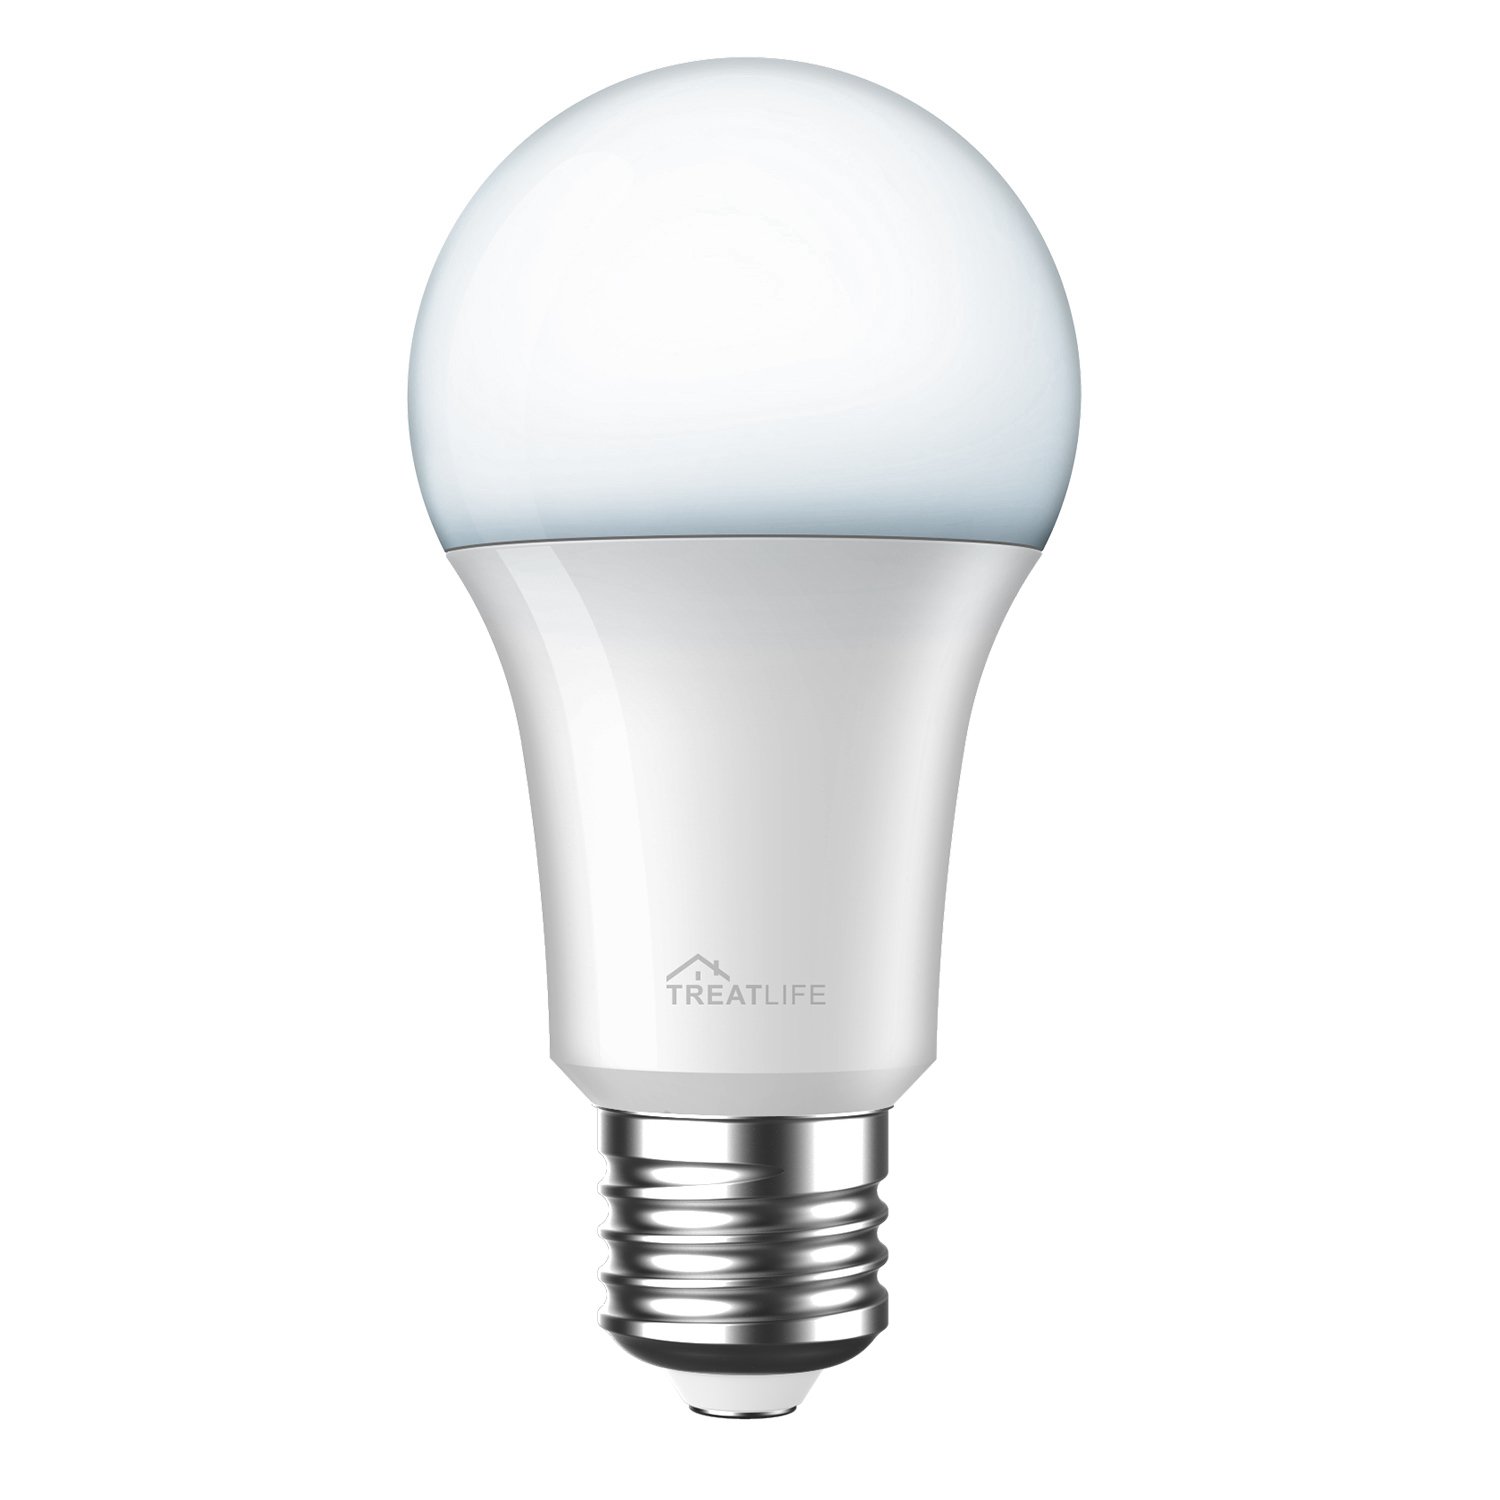 Treatlife Smart Bulb Review